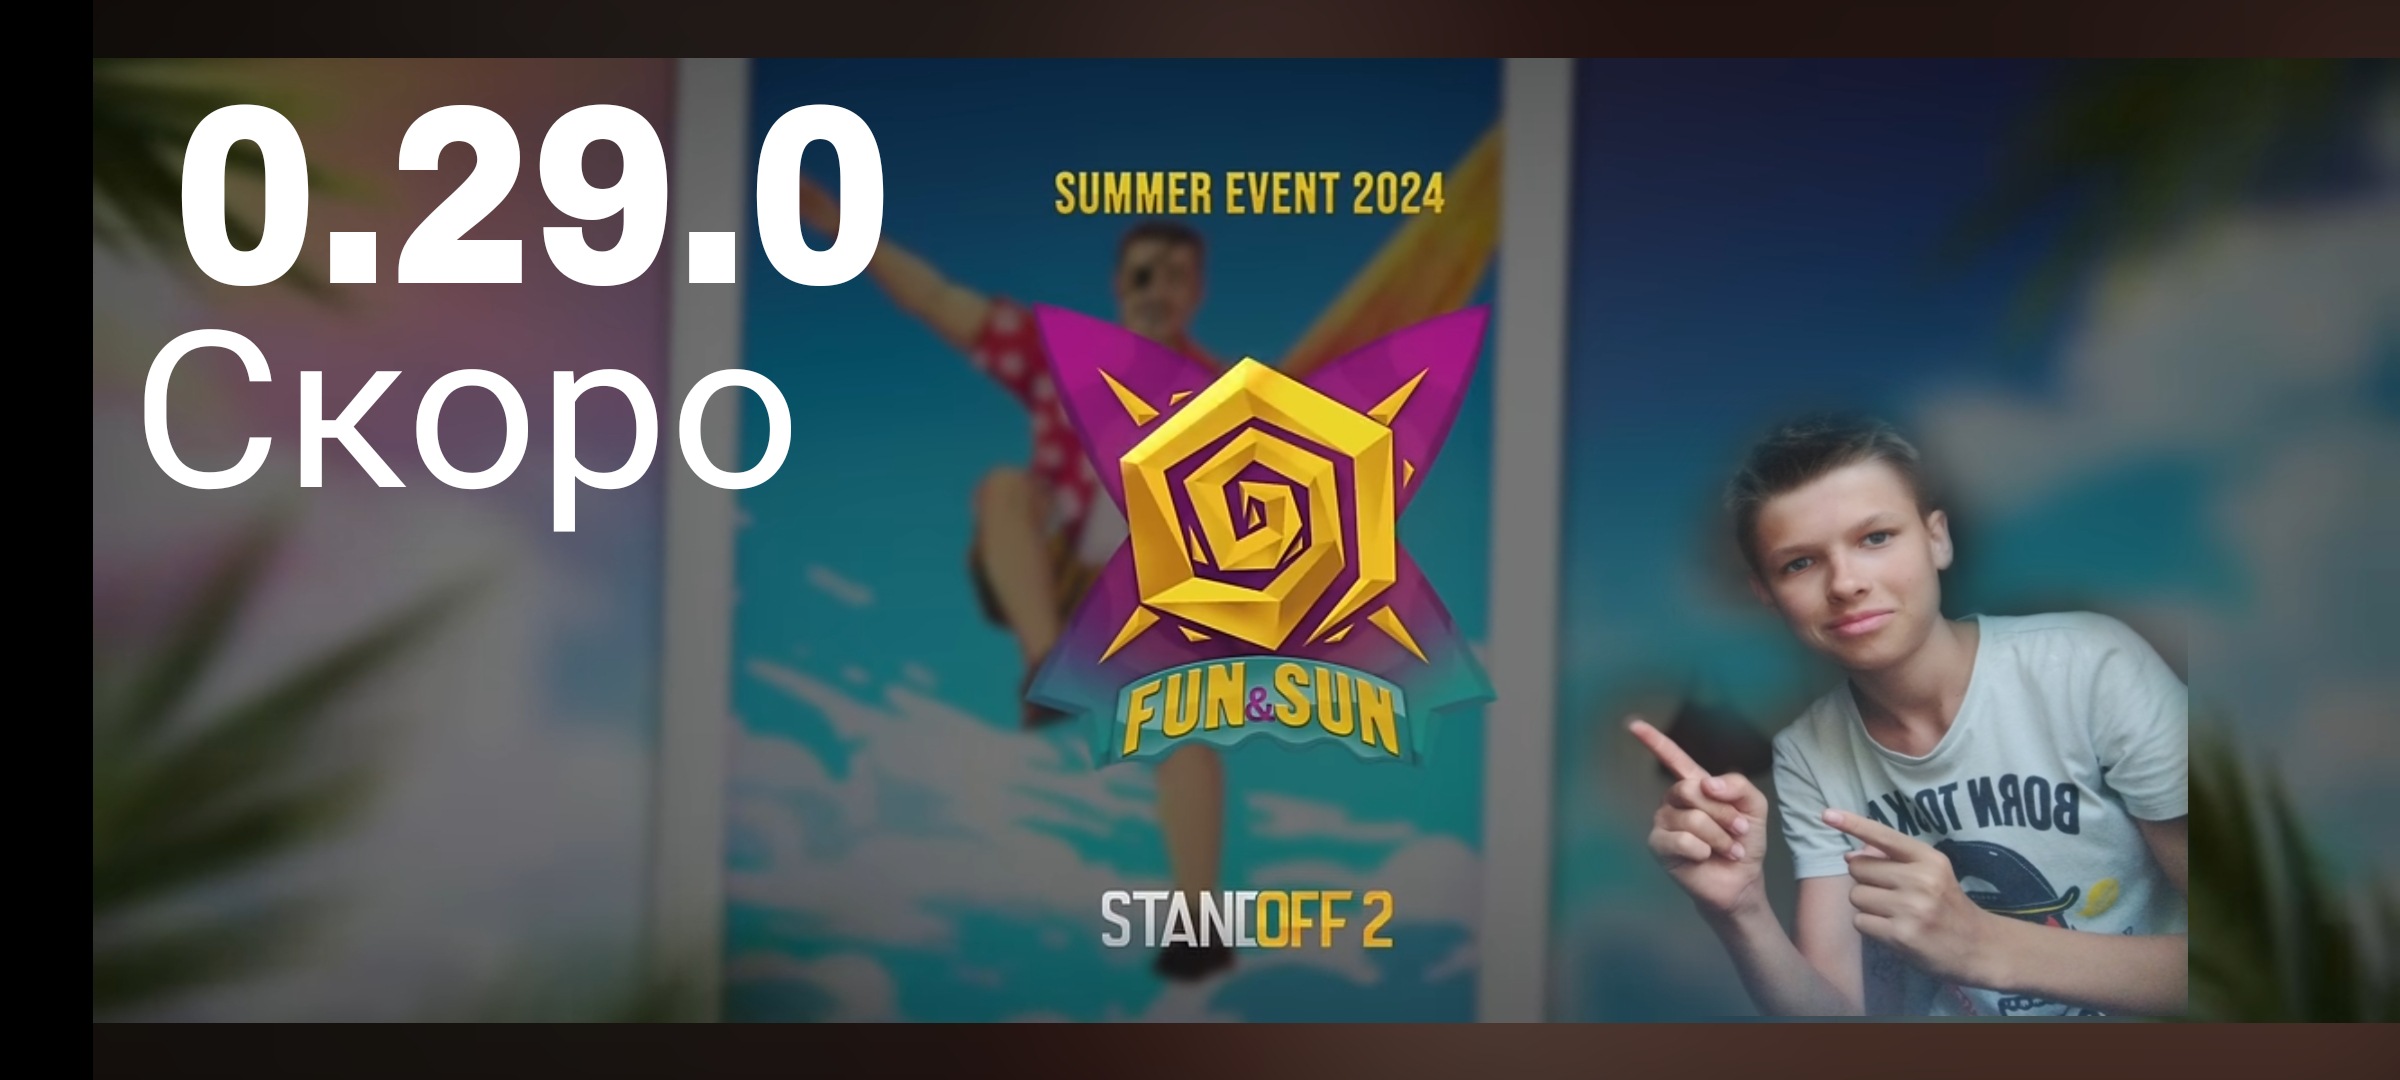 Смотрим трейлер 0.29.0 Fun&sun standoff 2 . Новая  граната !?!